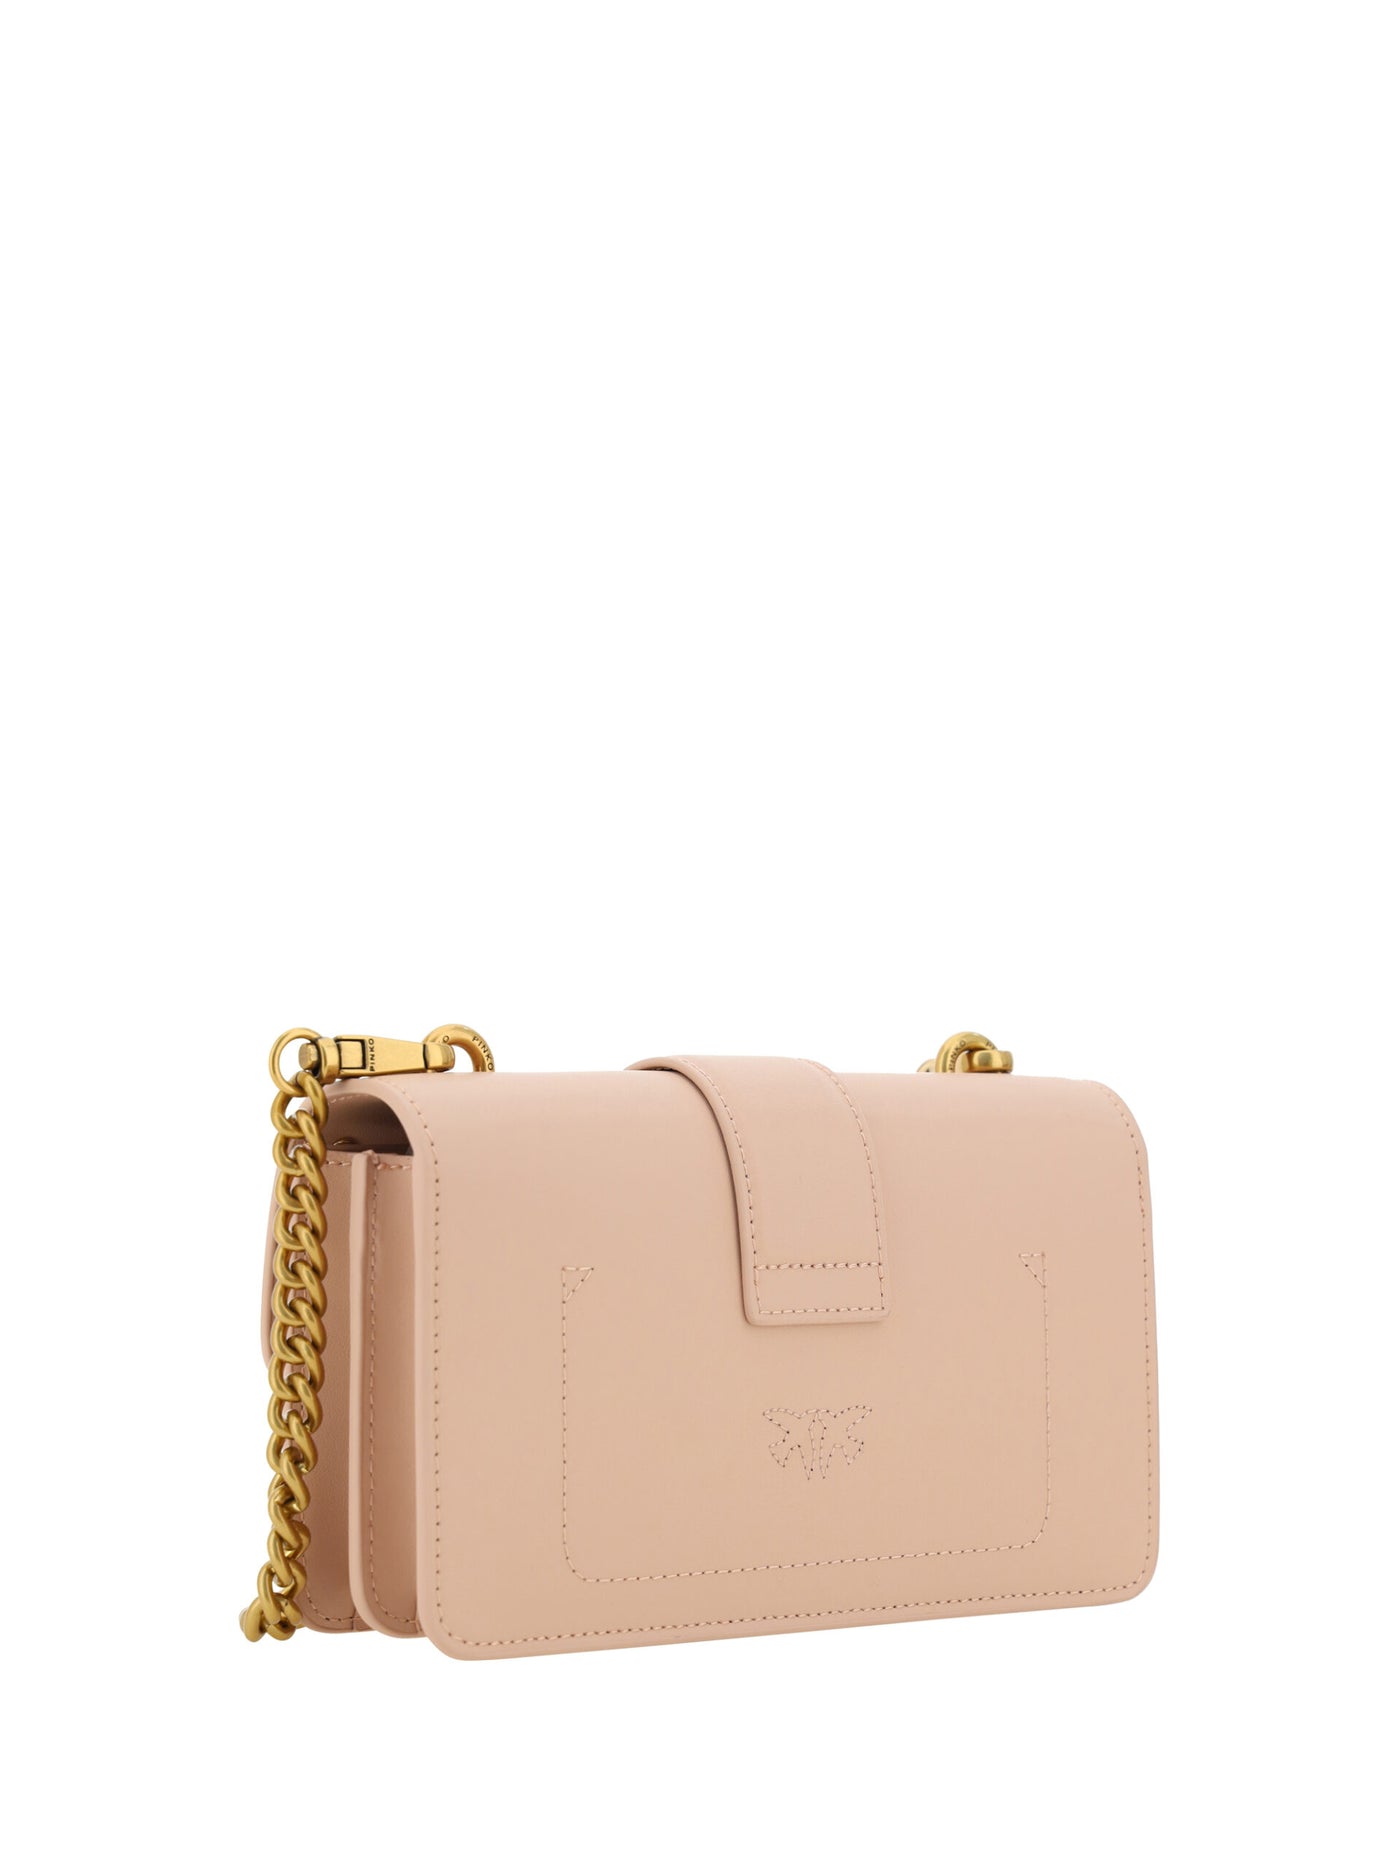 Pinko Pink Leather Mini Love One Shoulder Bag